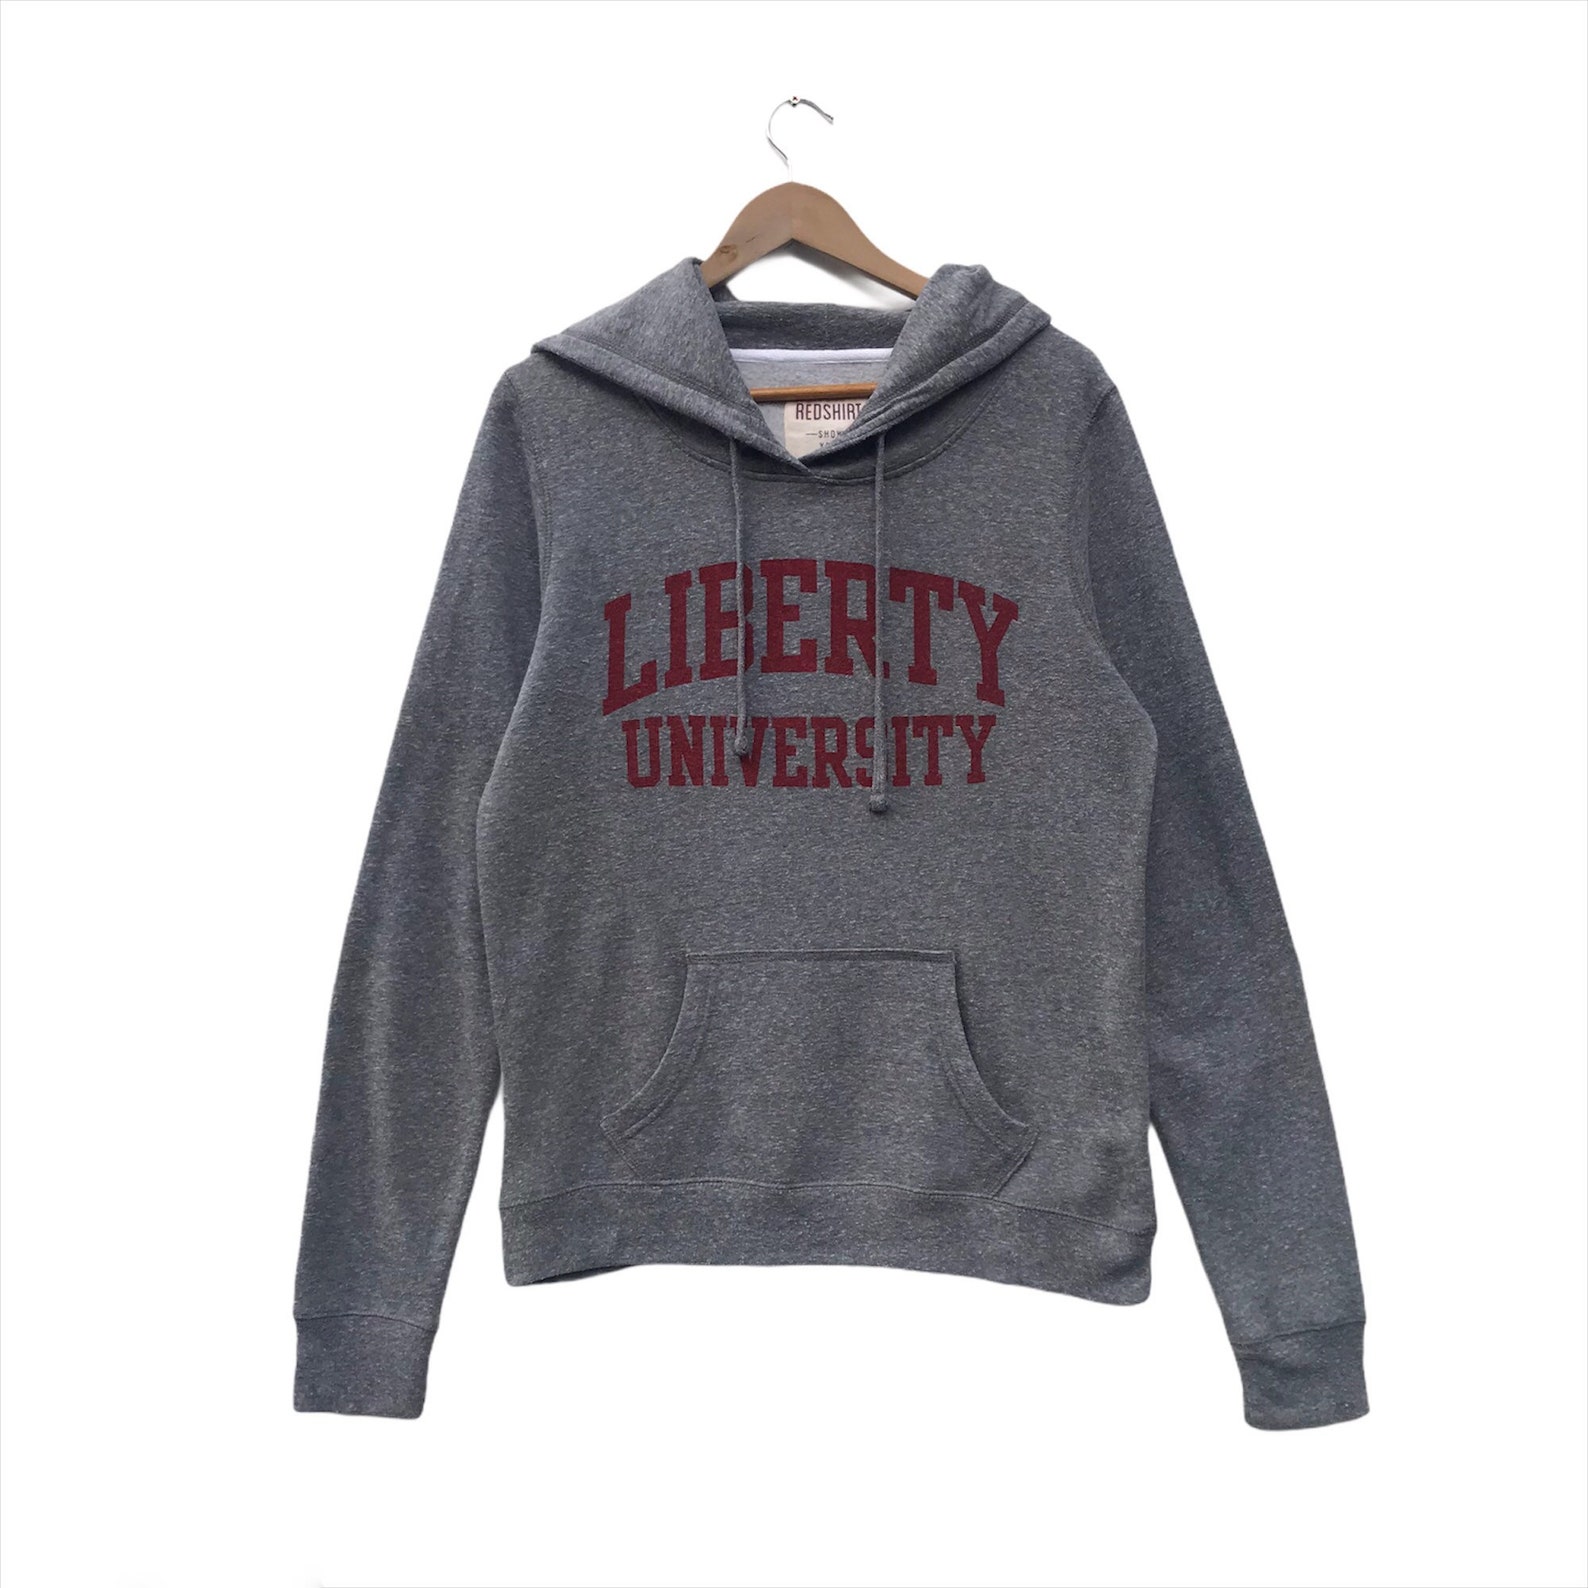 Vintage Liberty University Sweatshirt Hoodie Spellout Big Logo | Etsy